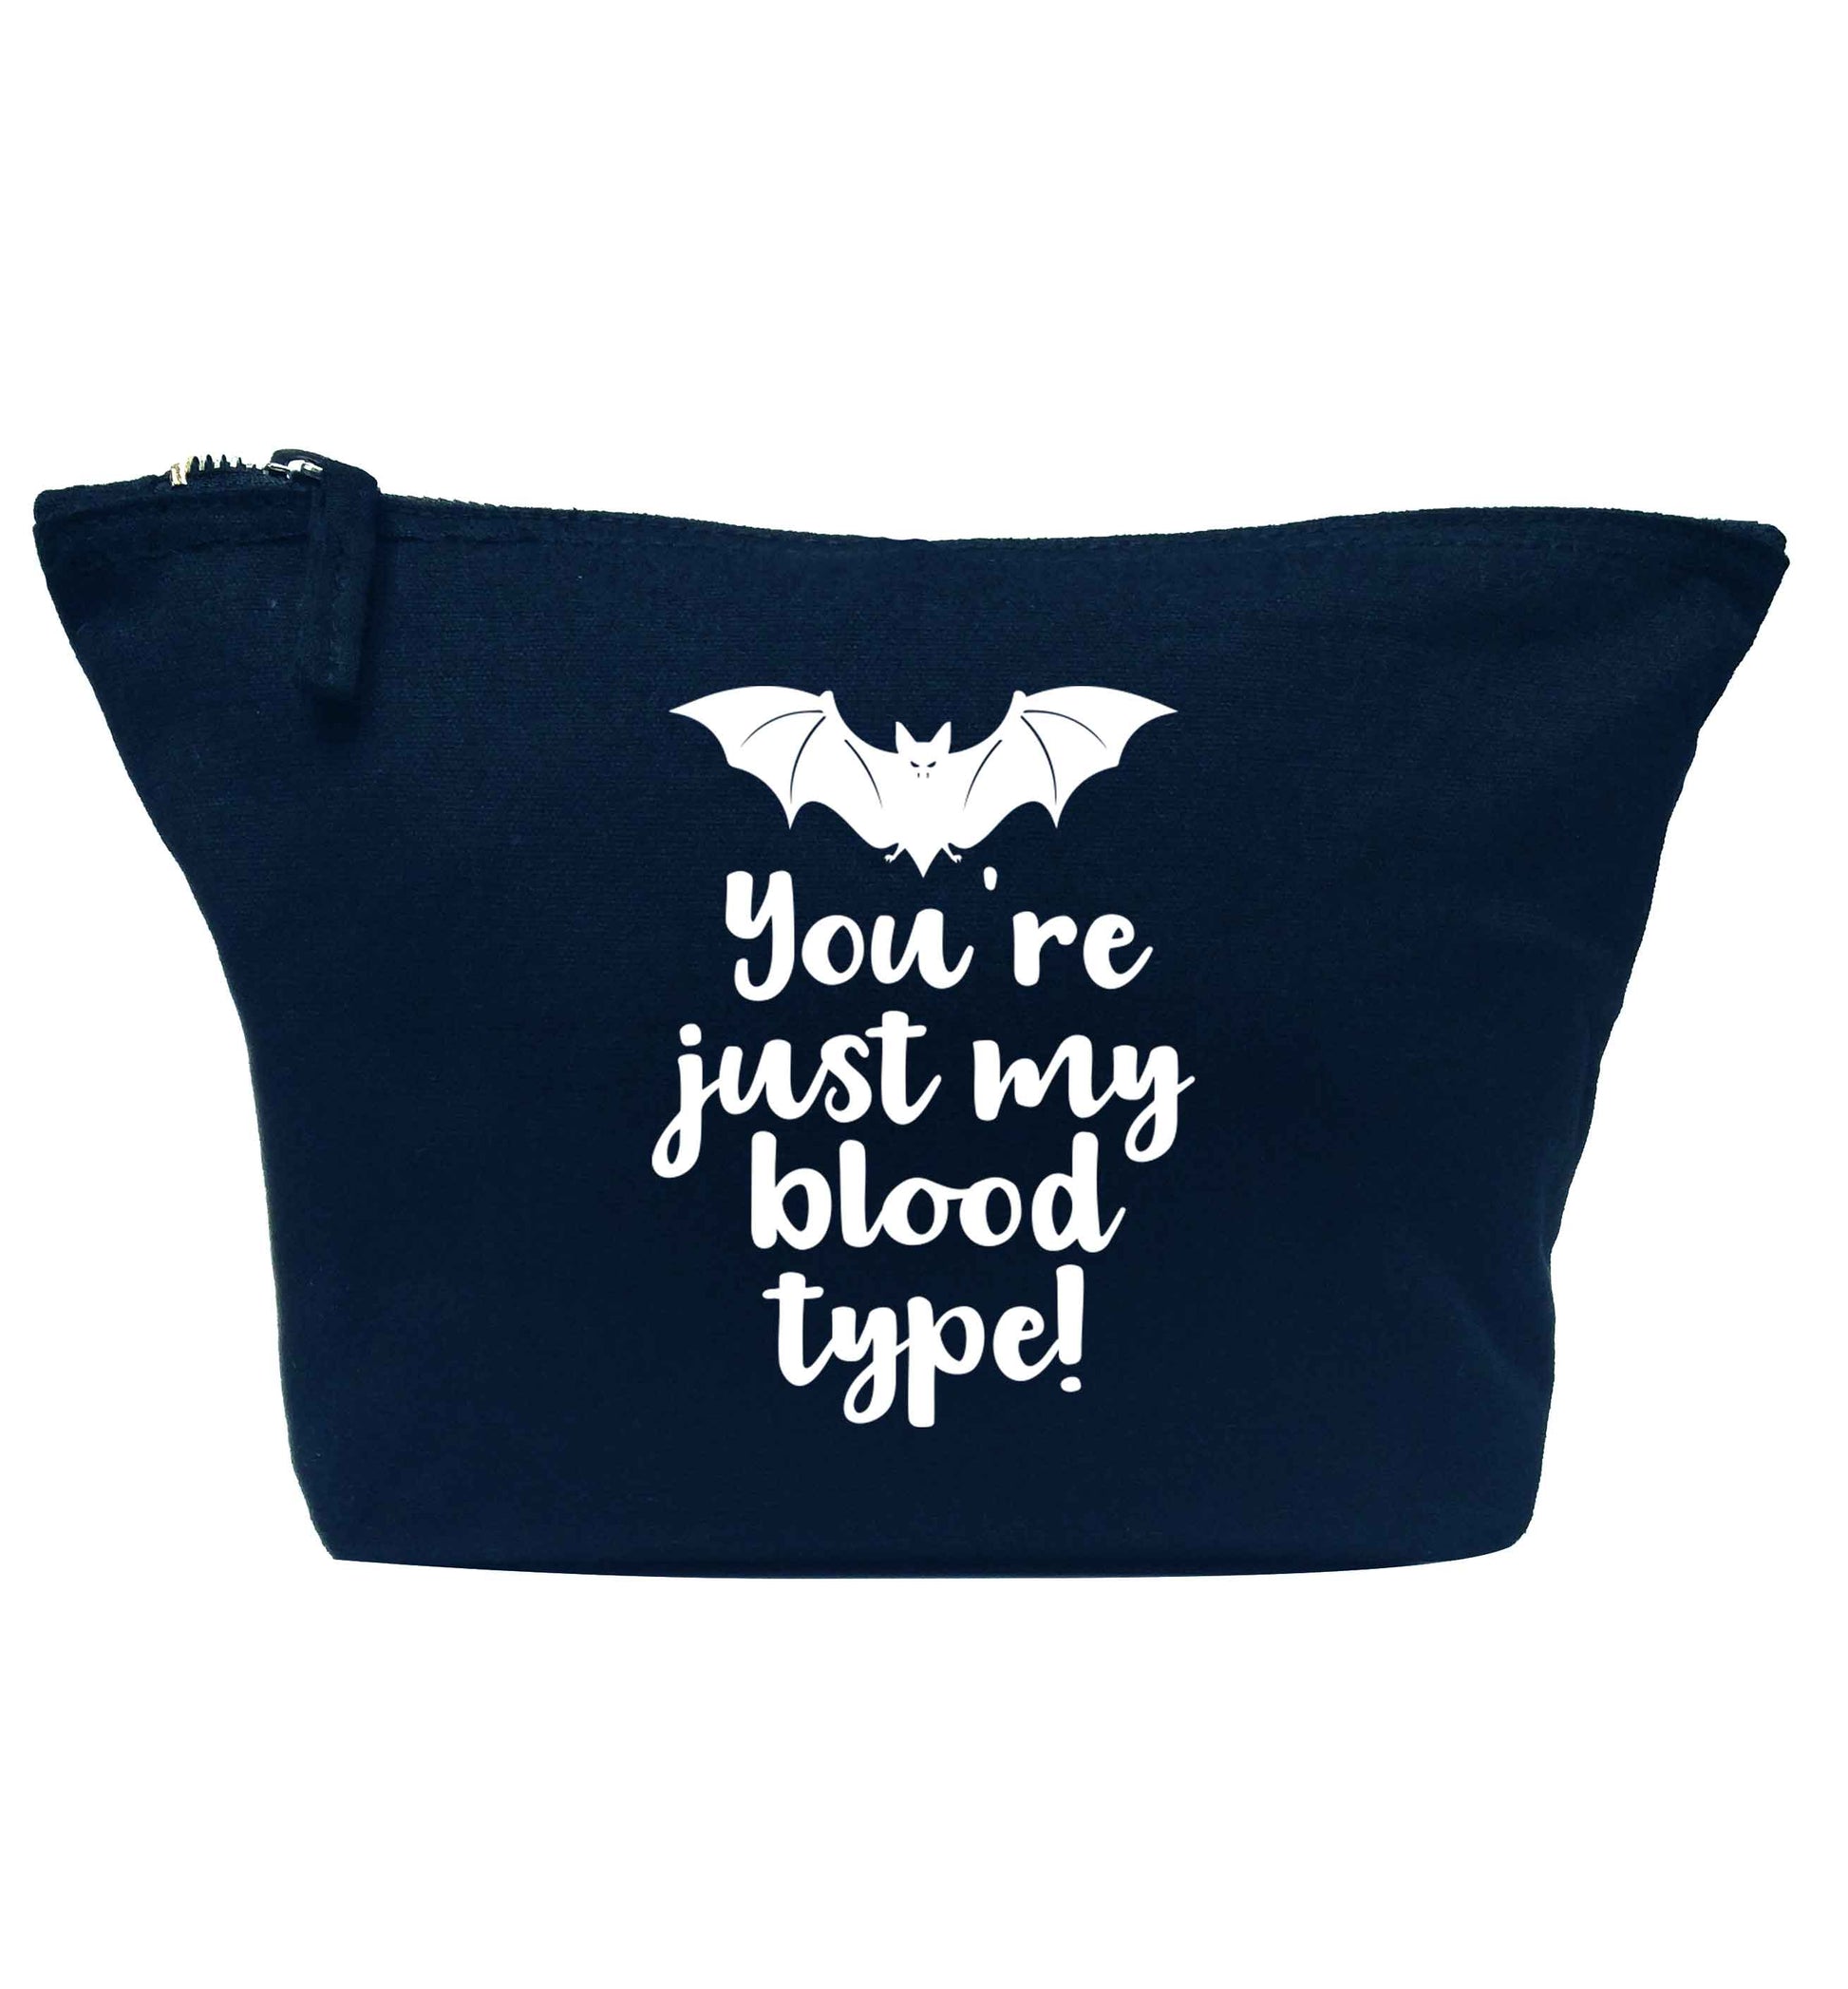 You're just my blood type navy makeup bag